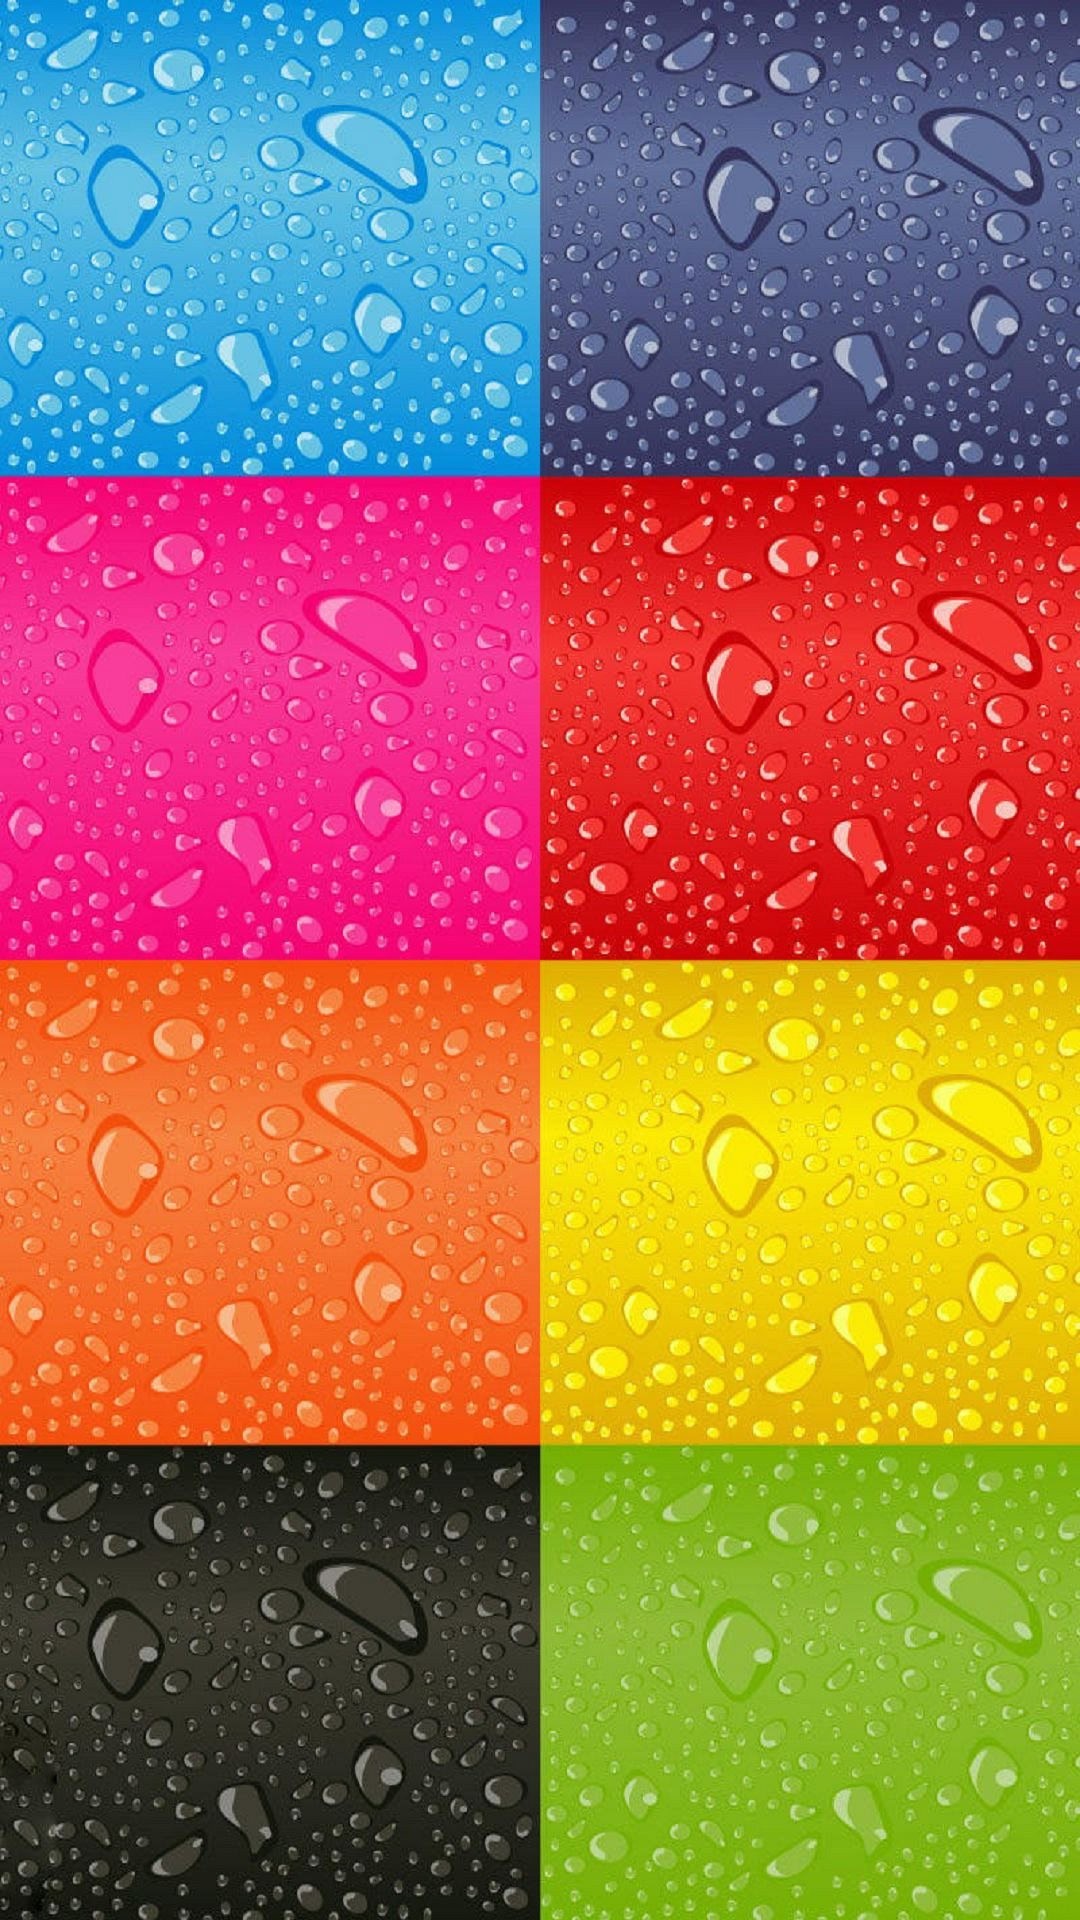 1080x1920 Z wallpaper full hd 1080 x 1920 smartphone screen division colorful